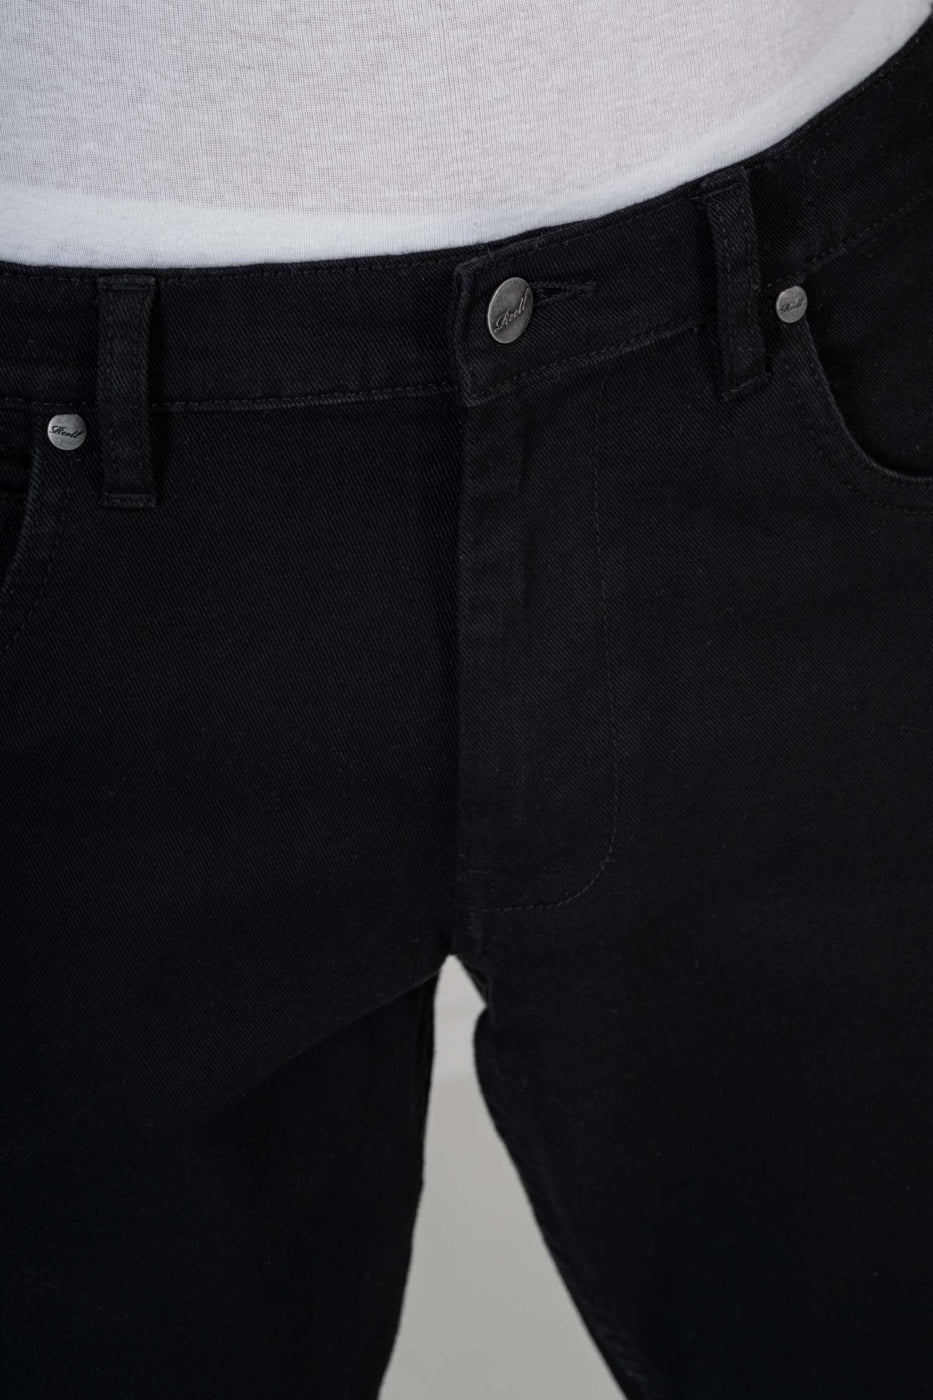 Reell Lowfly 2 Jeans - Black